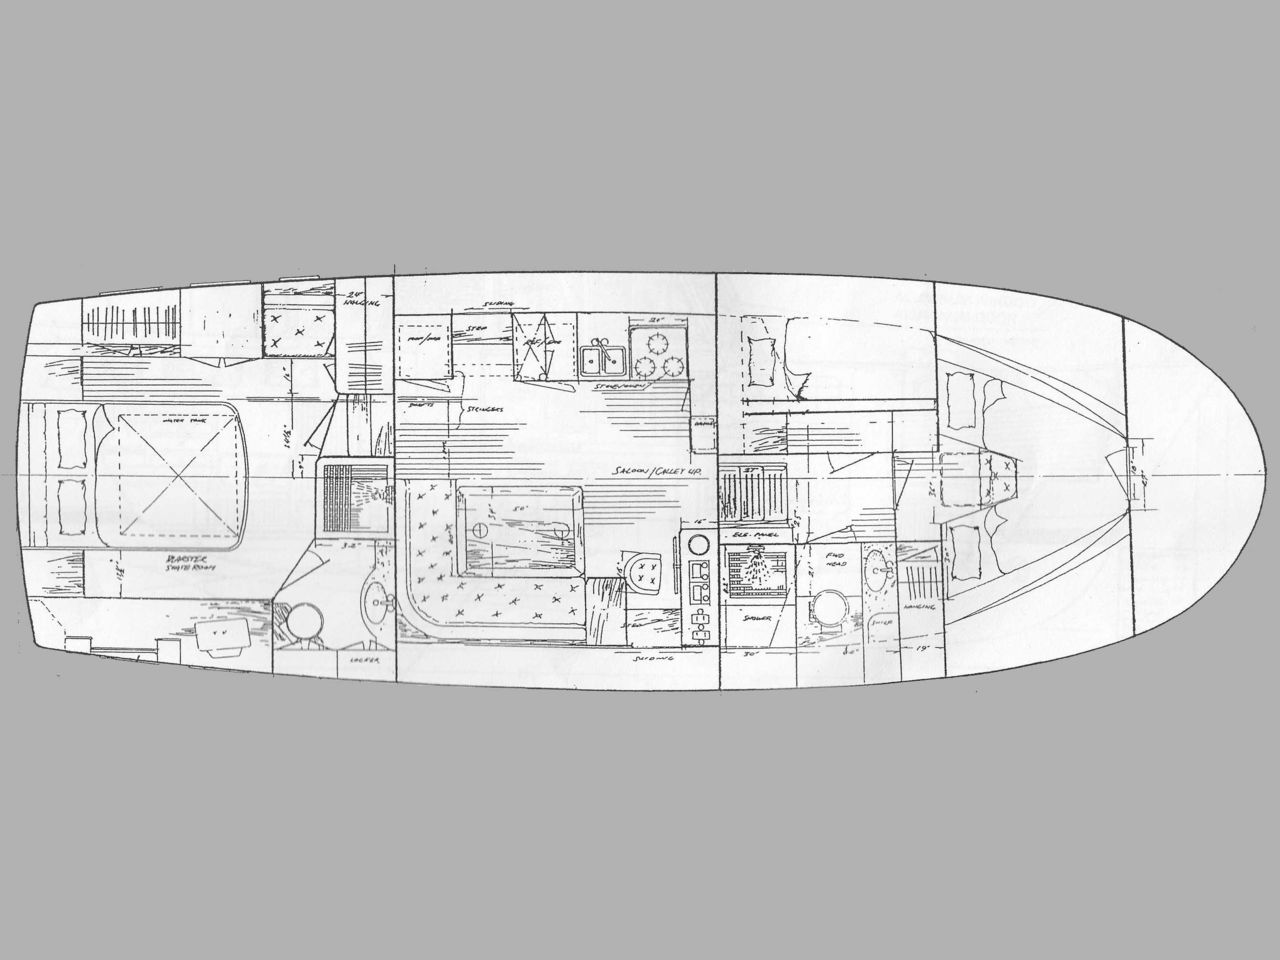 CA-Yachts Classic Adria Trawler - image 3